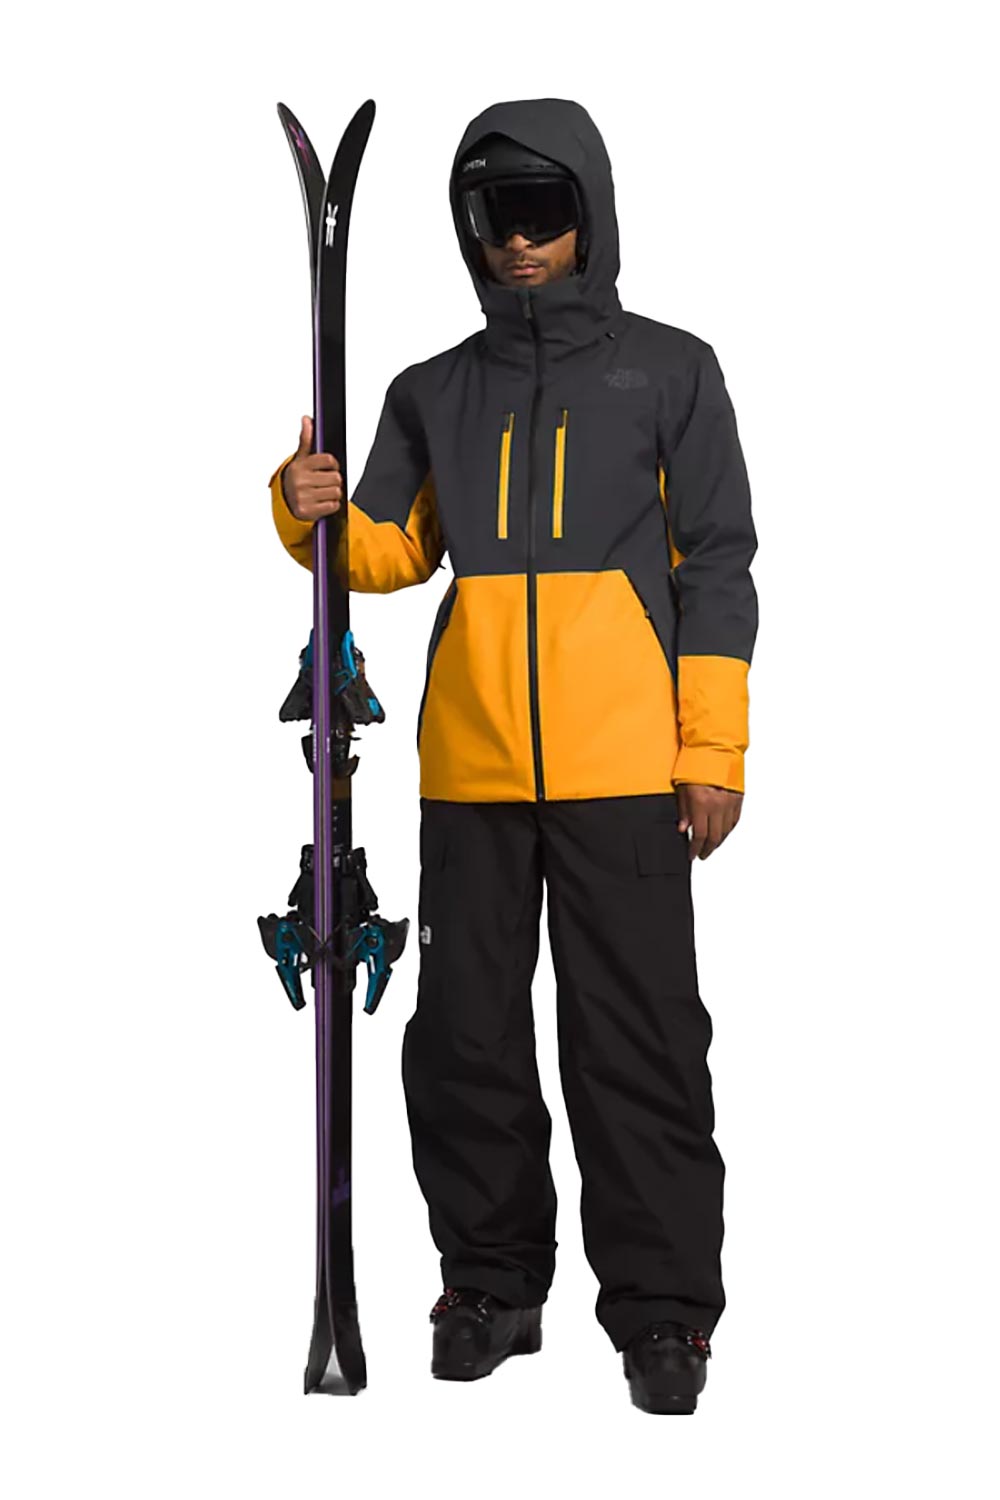 North Face men's ski jacket, dark gray and yellow